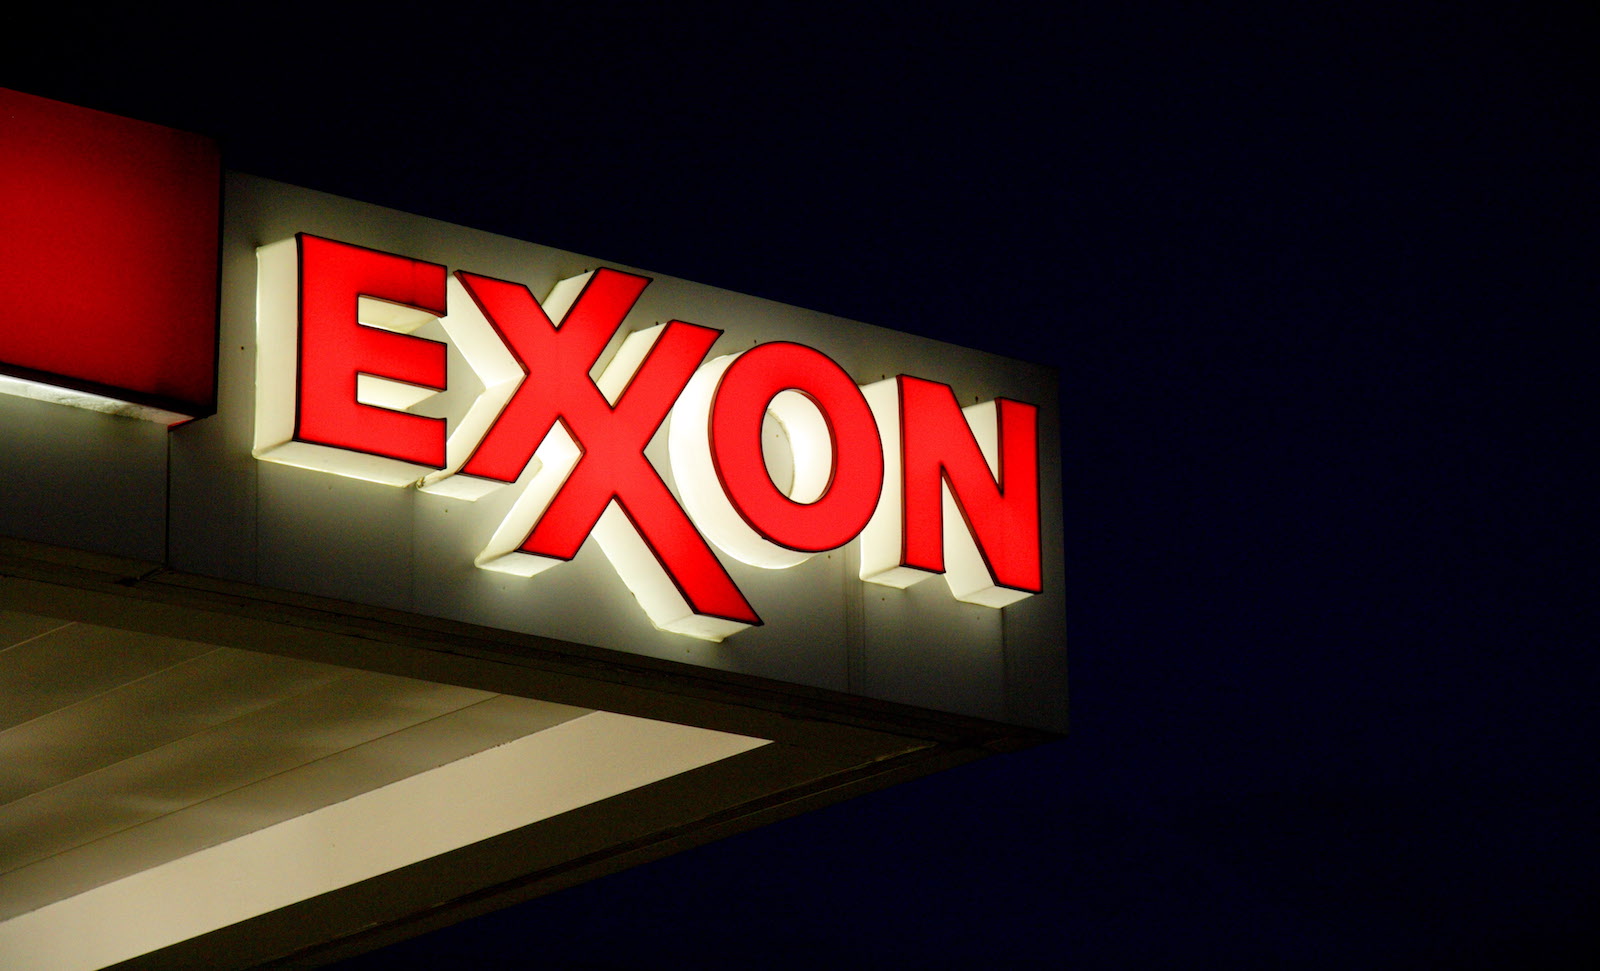 An Exxon gas station sign against a dark night sky